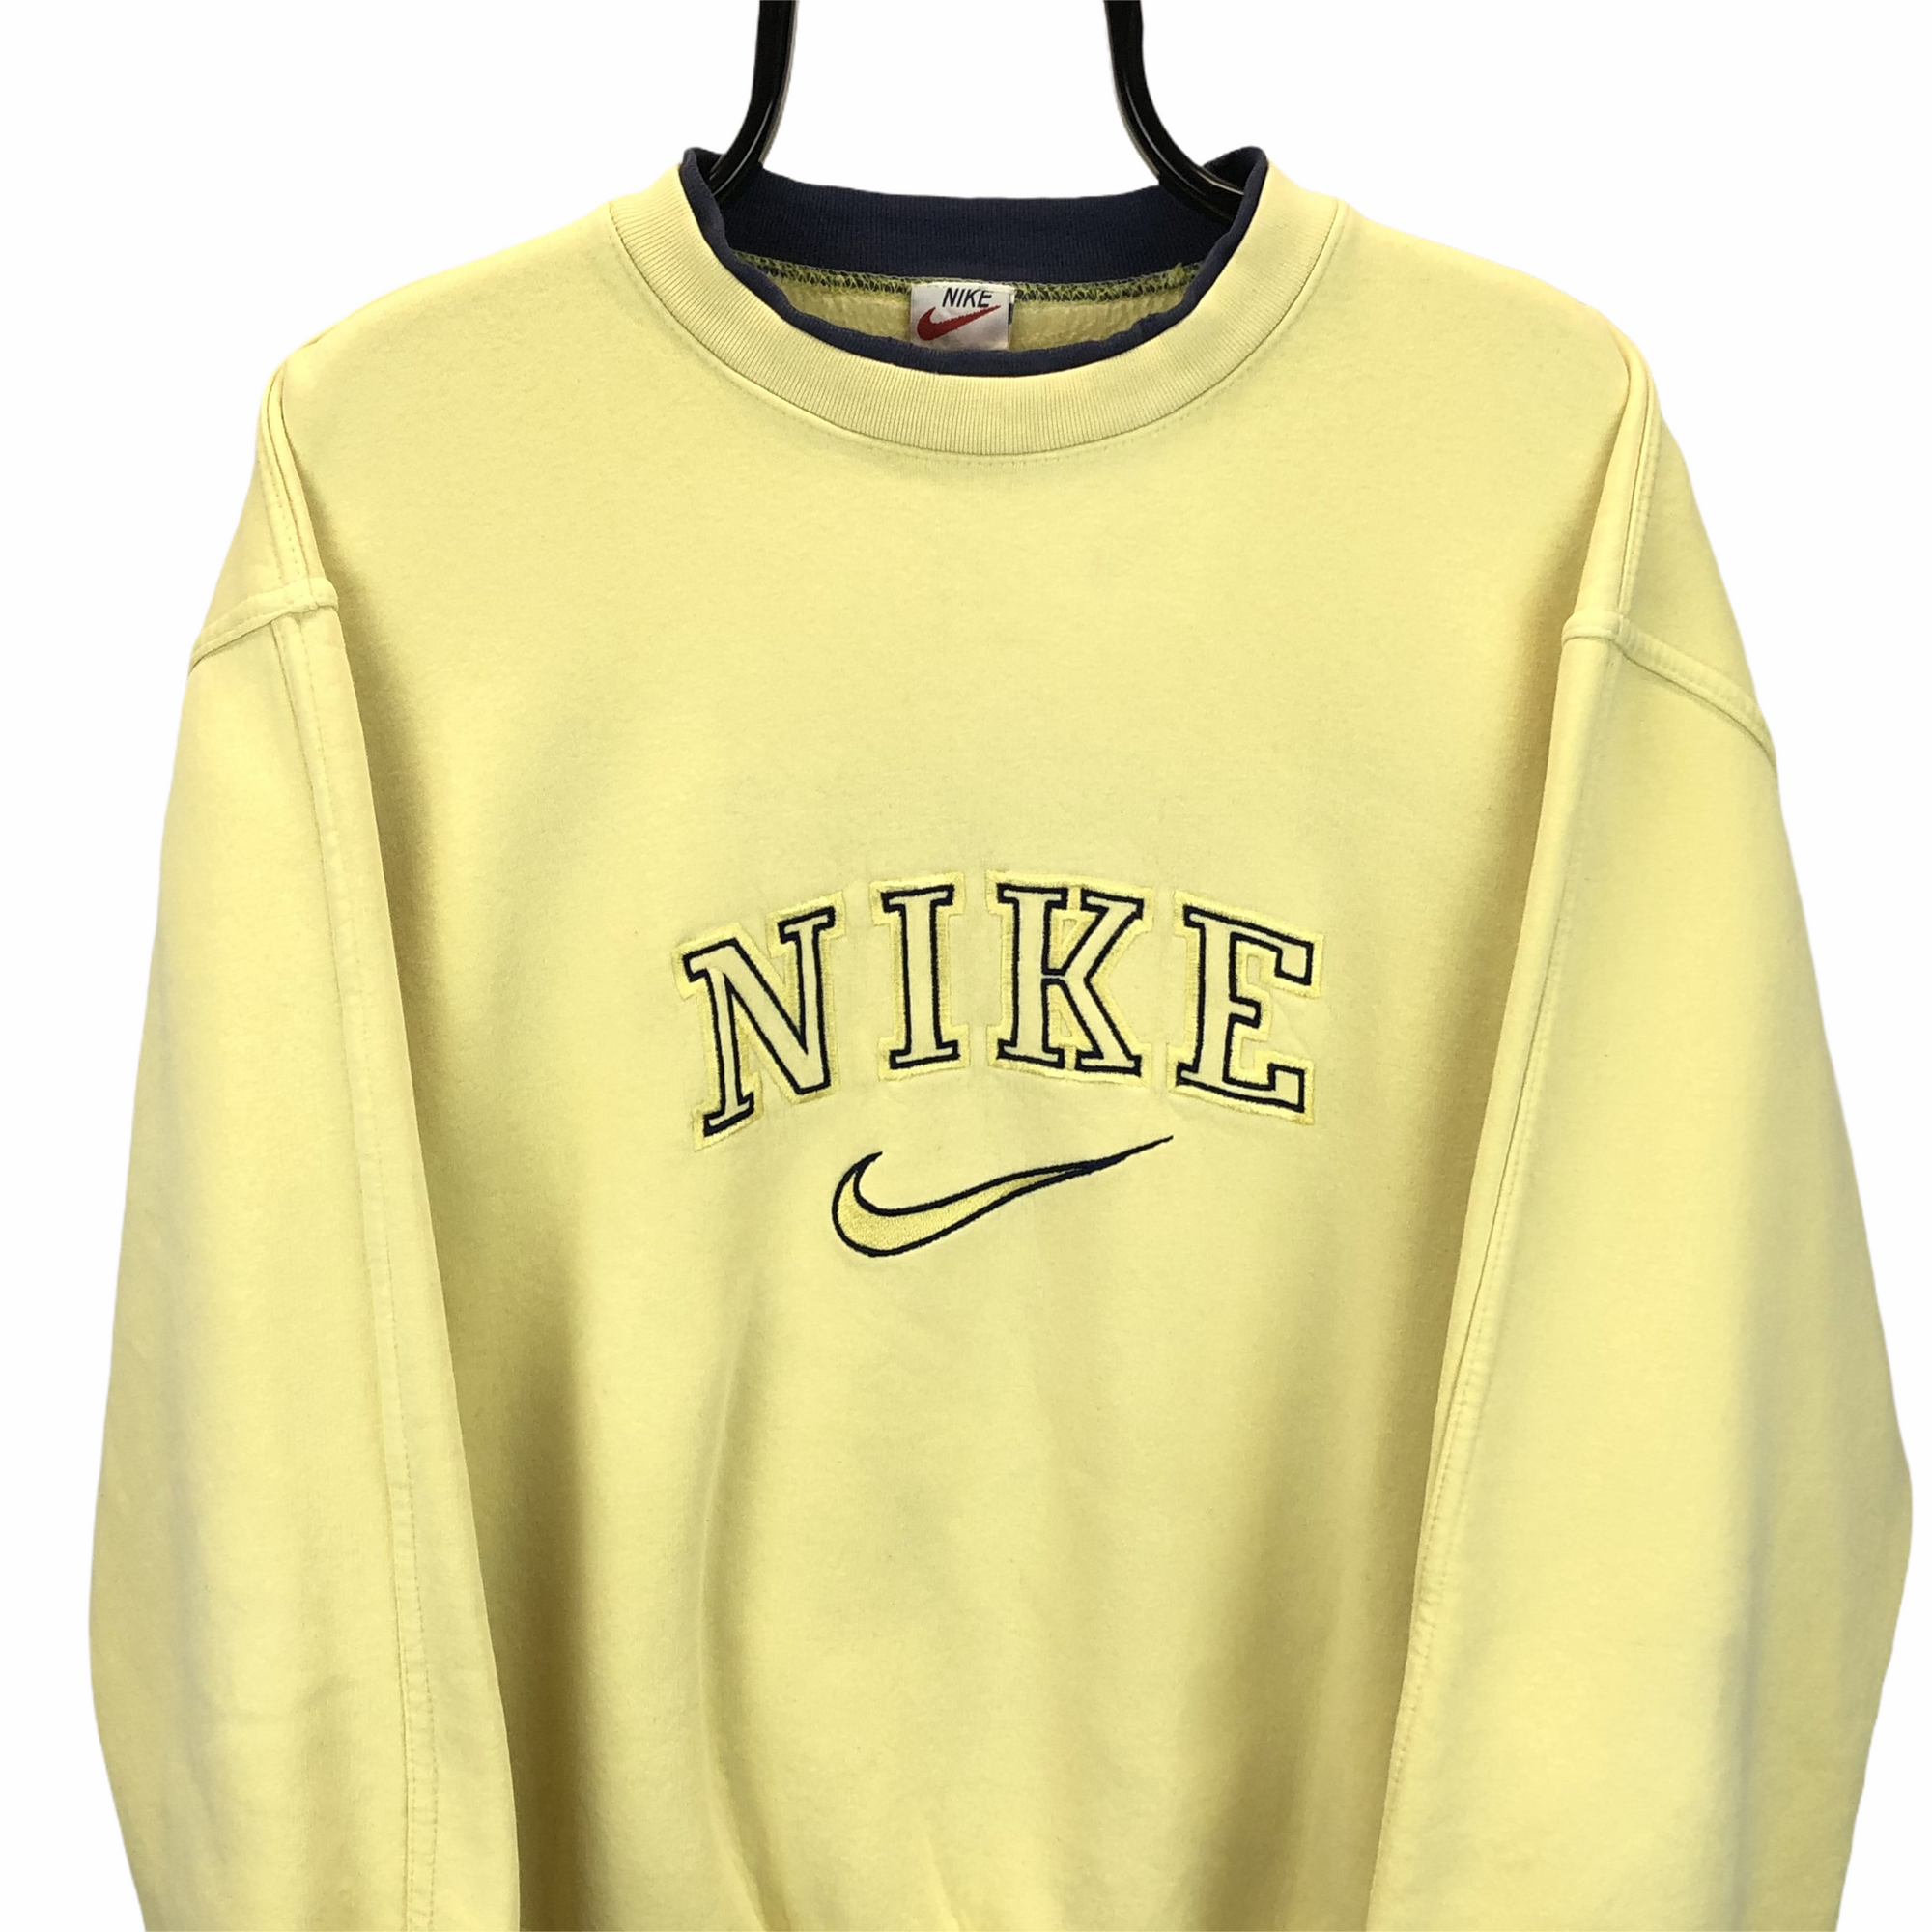 Vintage 90s Nike Spellout Sweatshirt in Lemon - Men's Medium/Women's Large